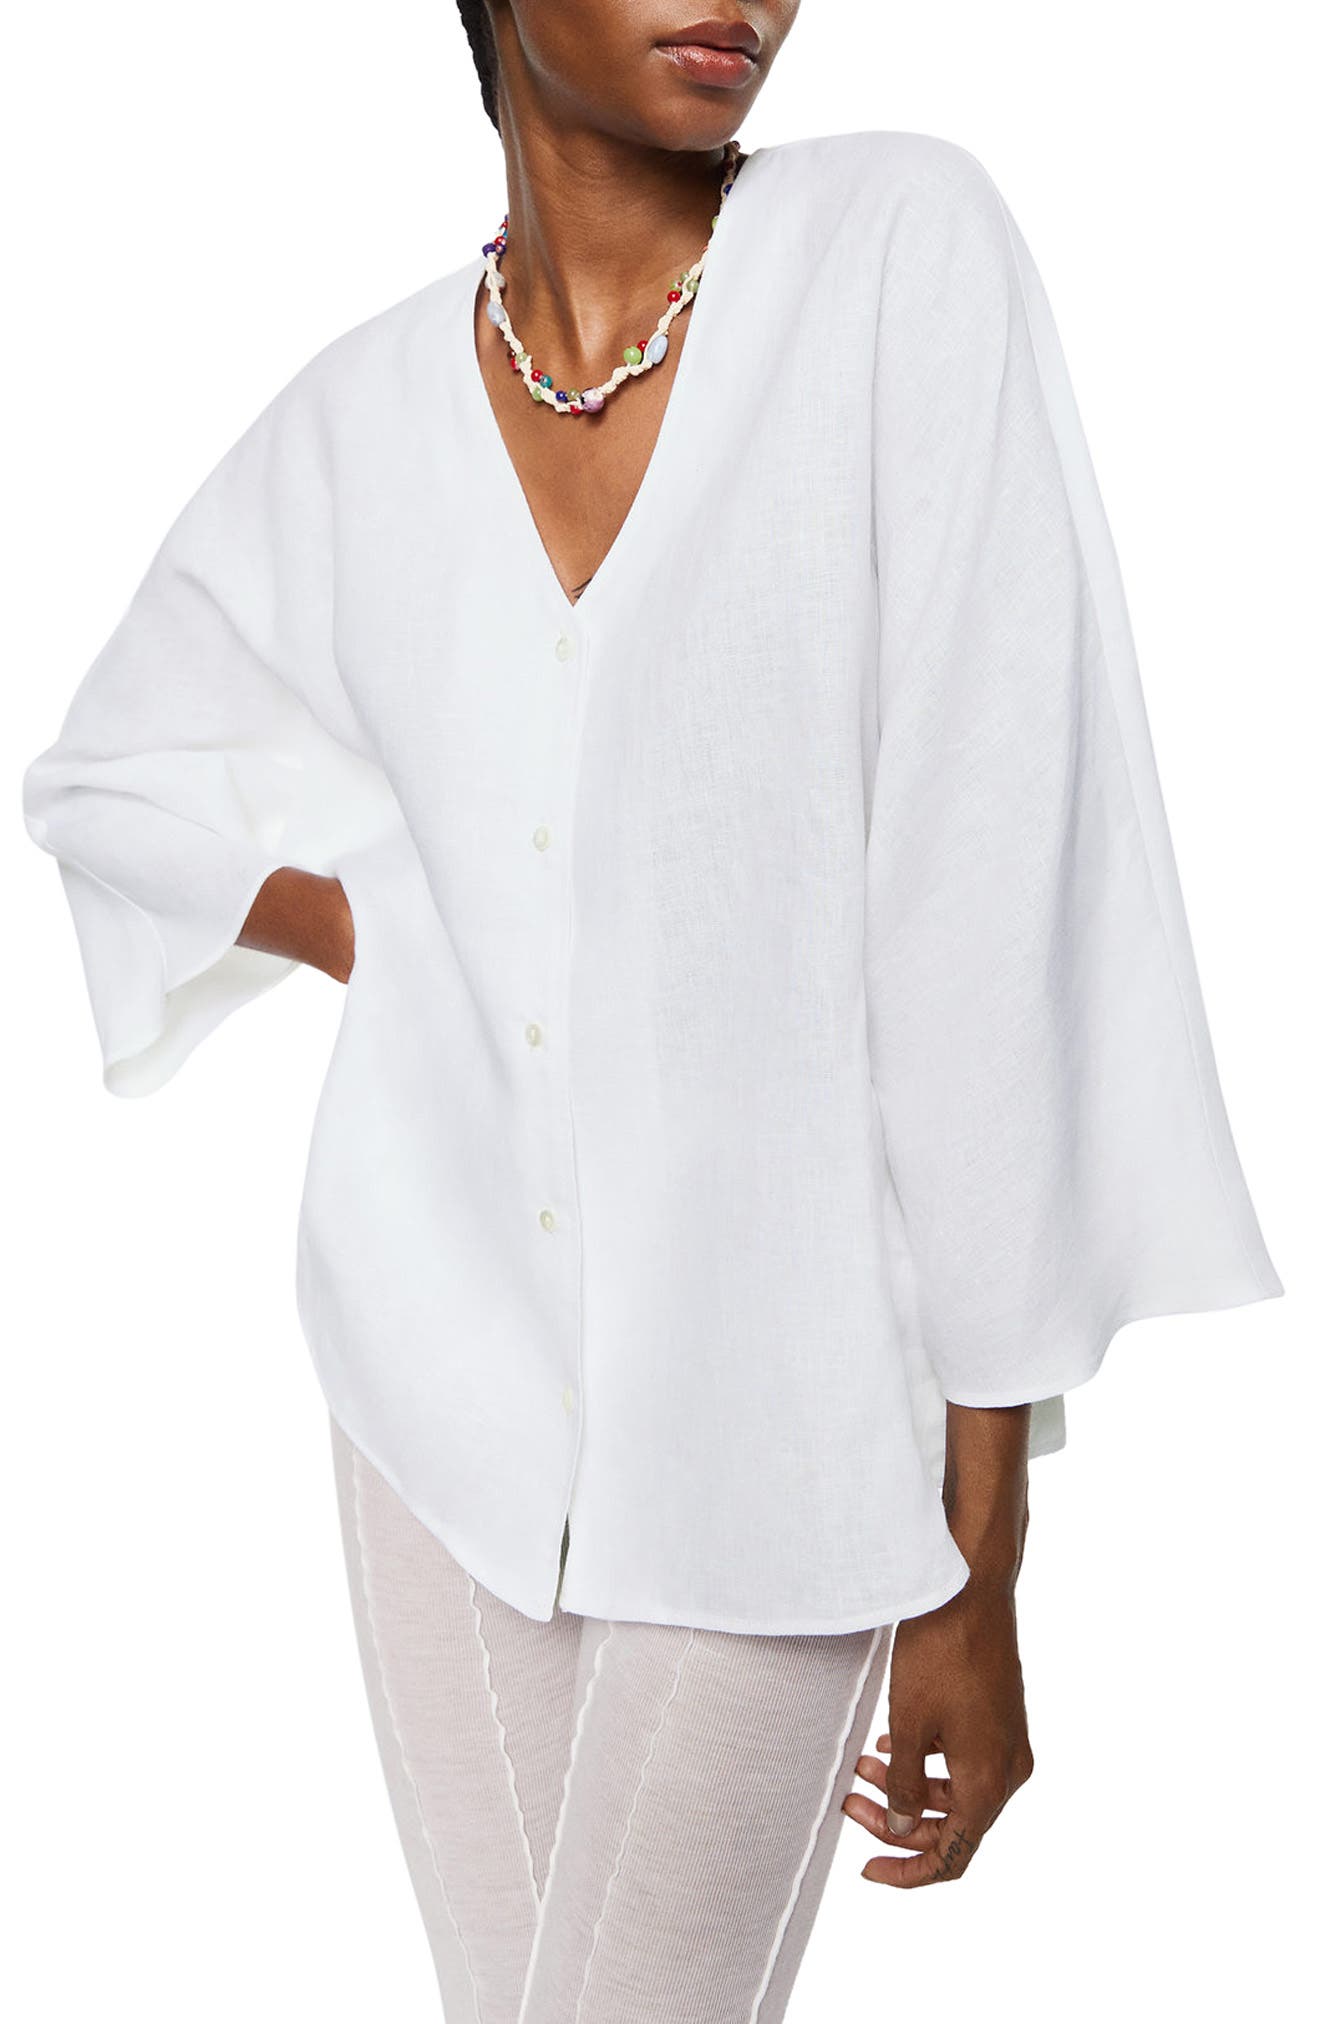 White S WOMEN FASHION Shirts & T-shirts Lace openwork Mango blouse discount 95% 